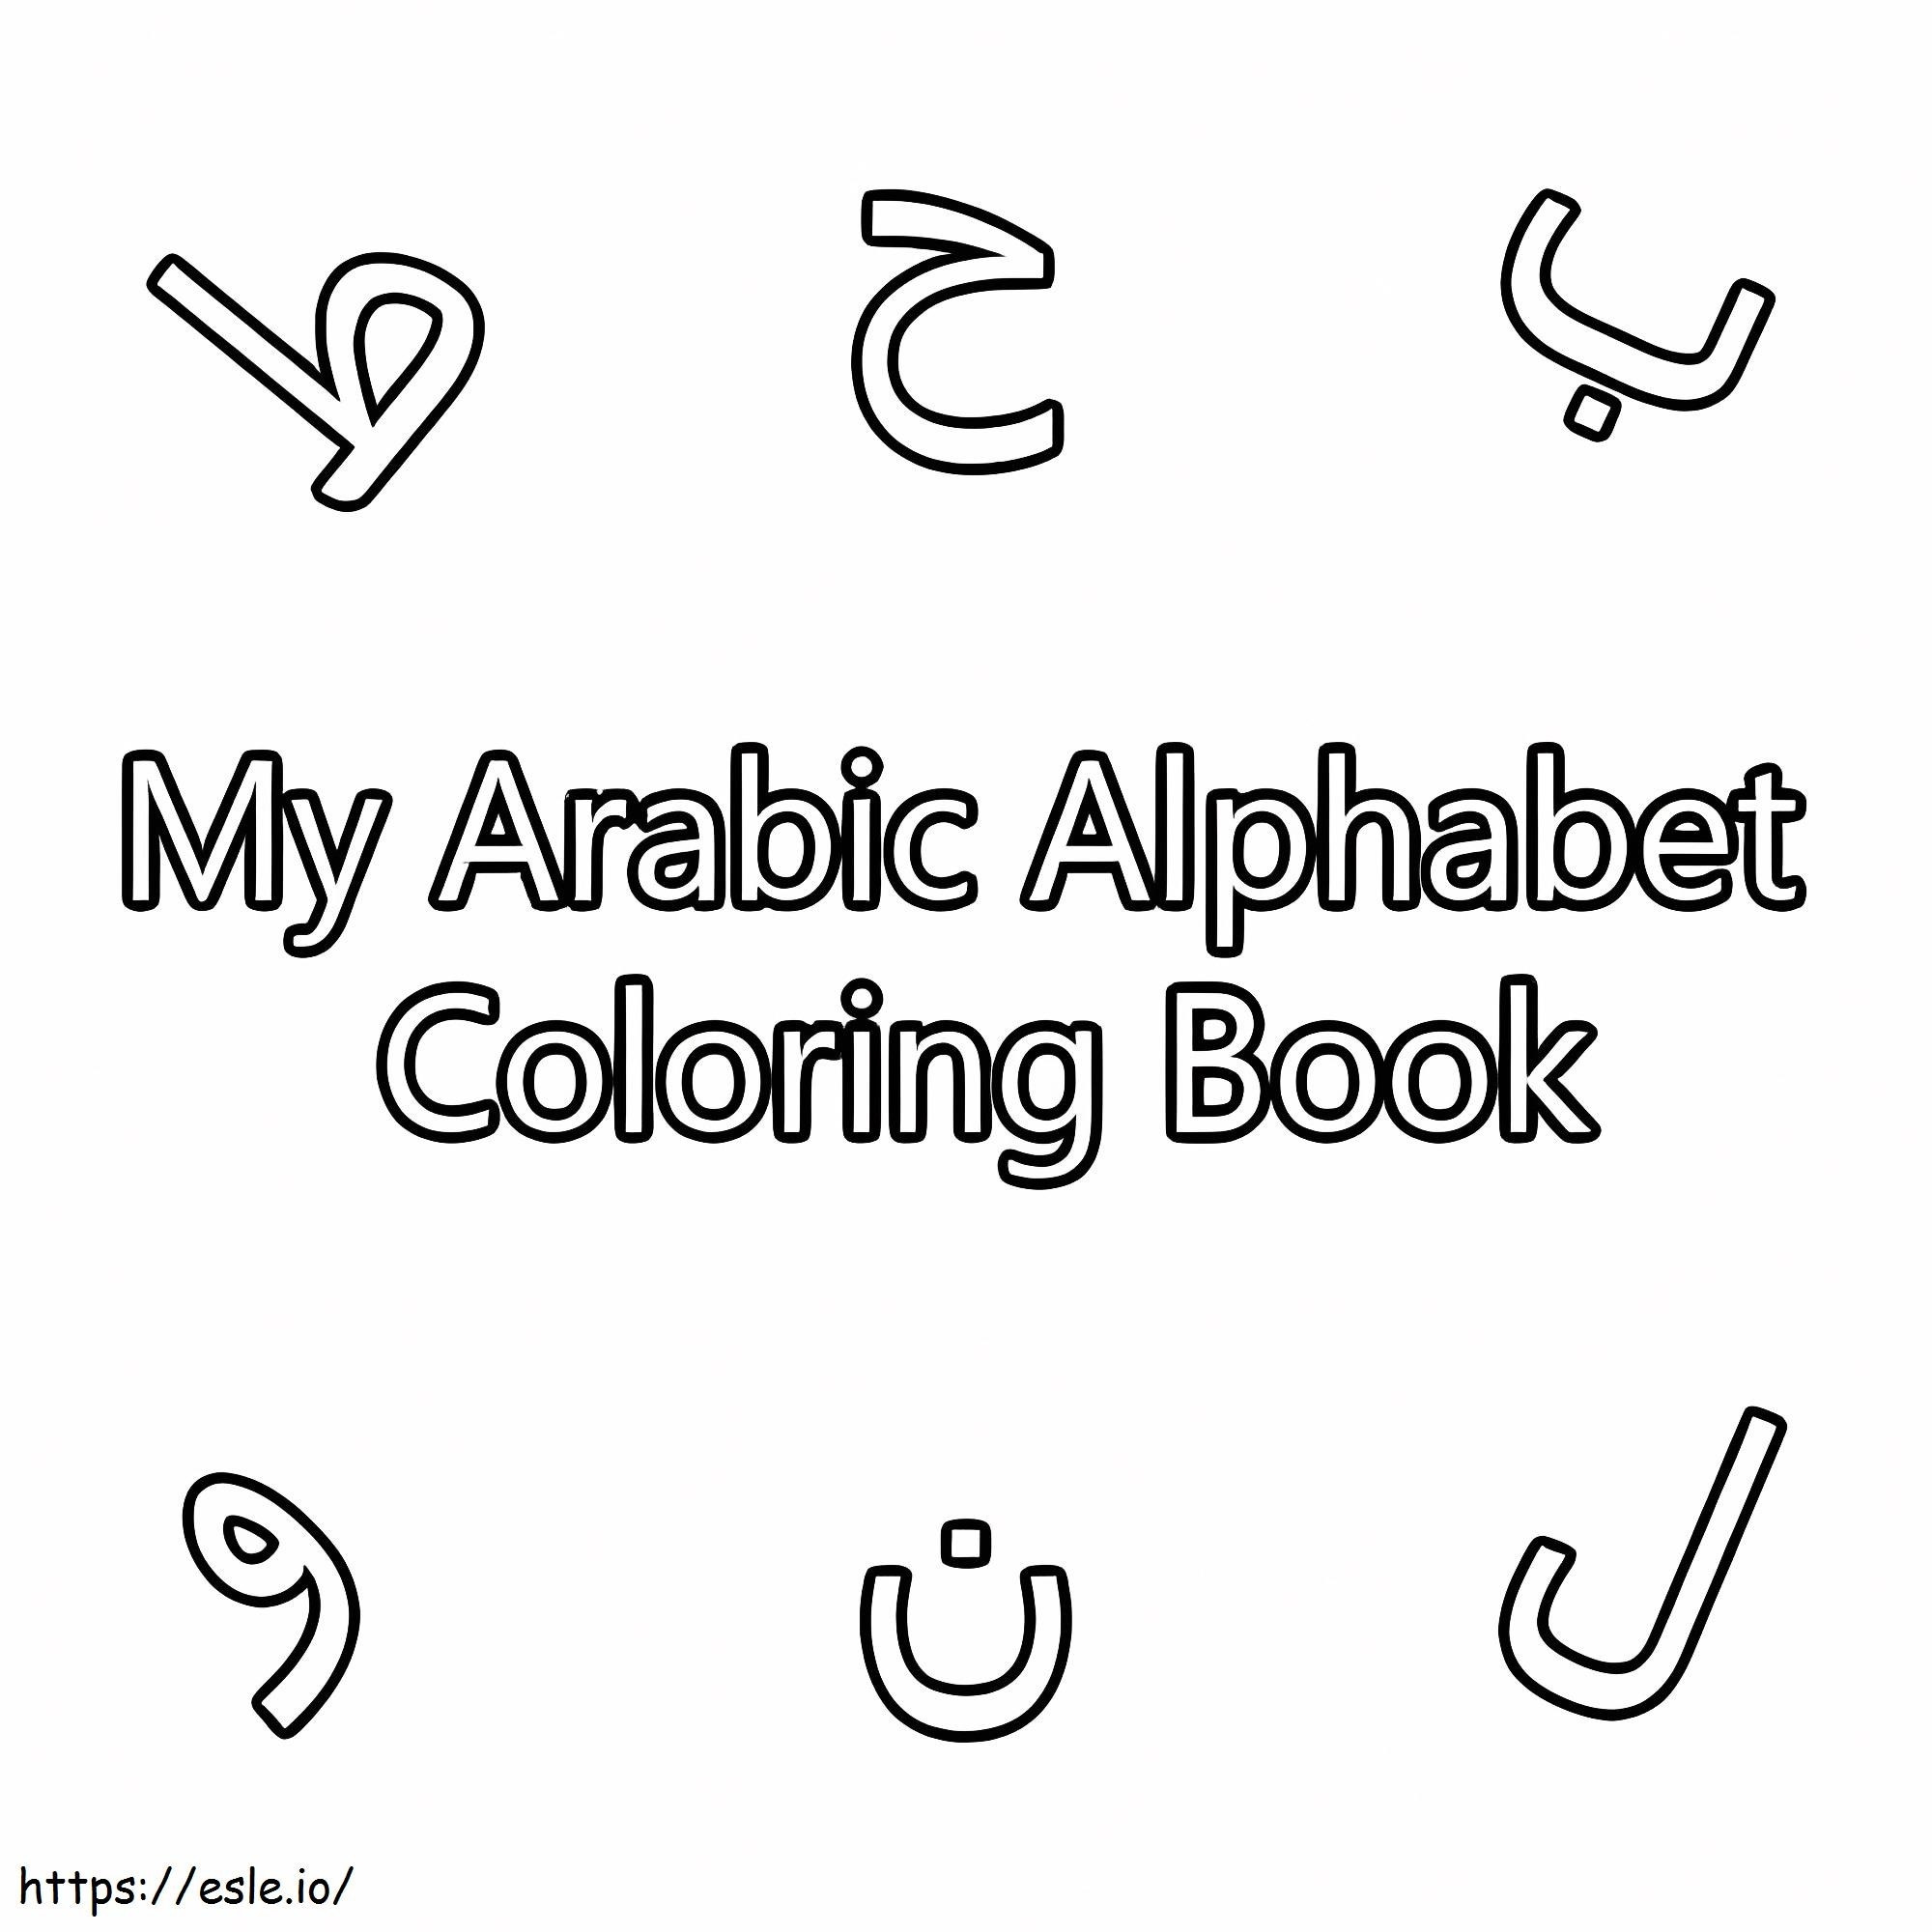 Imprimir alfabeto árabe para colorear